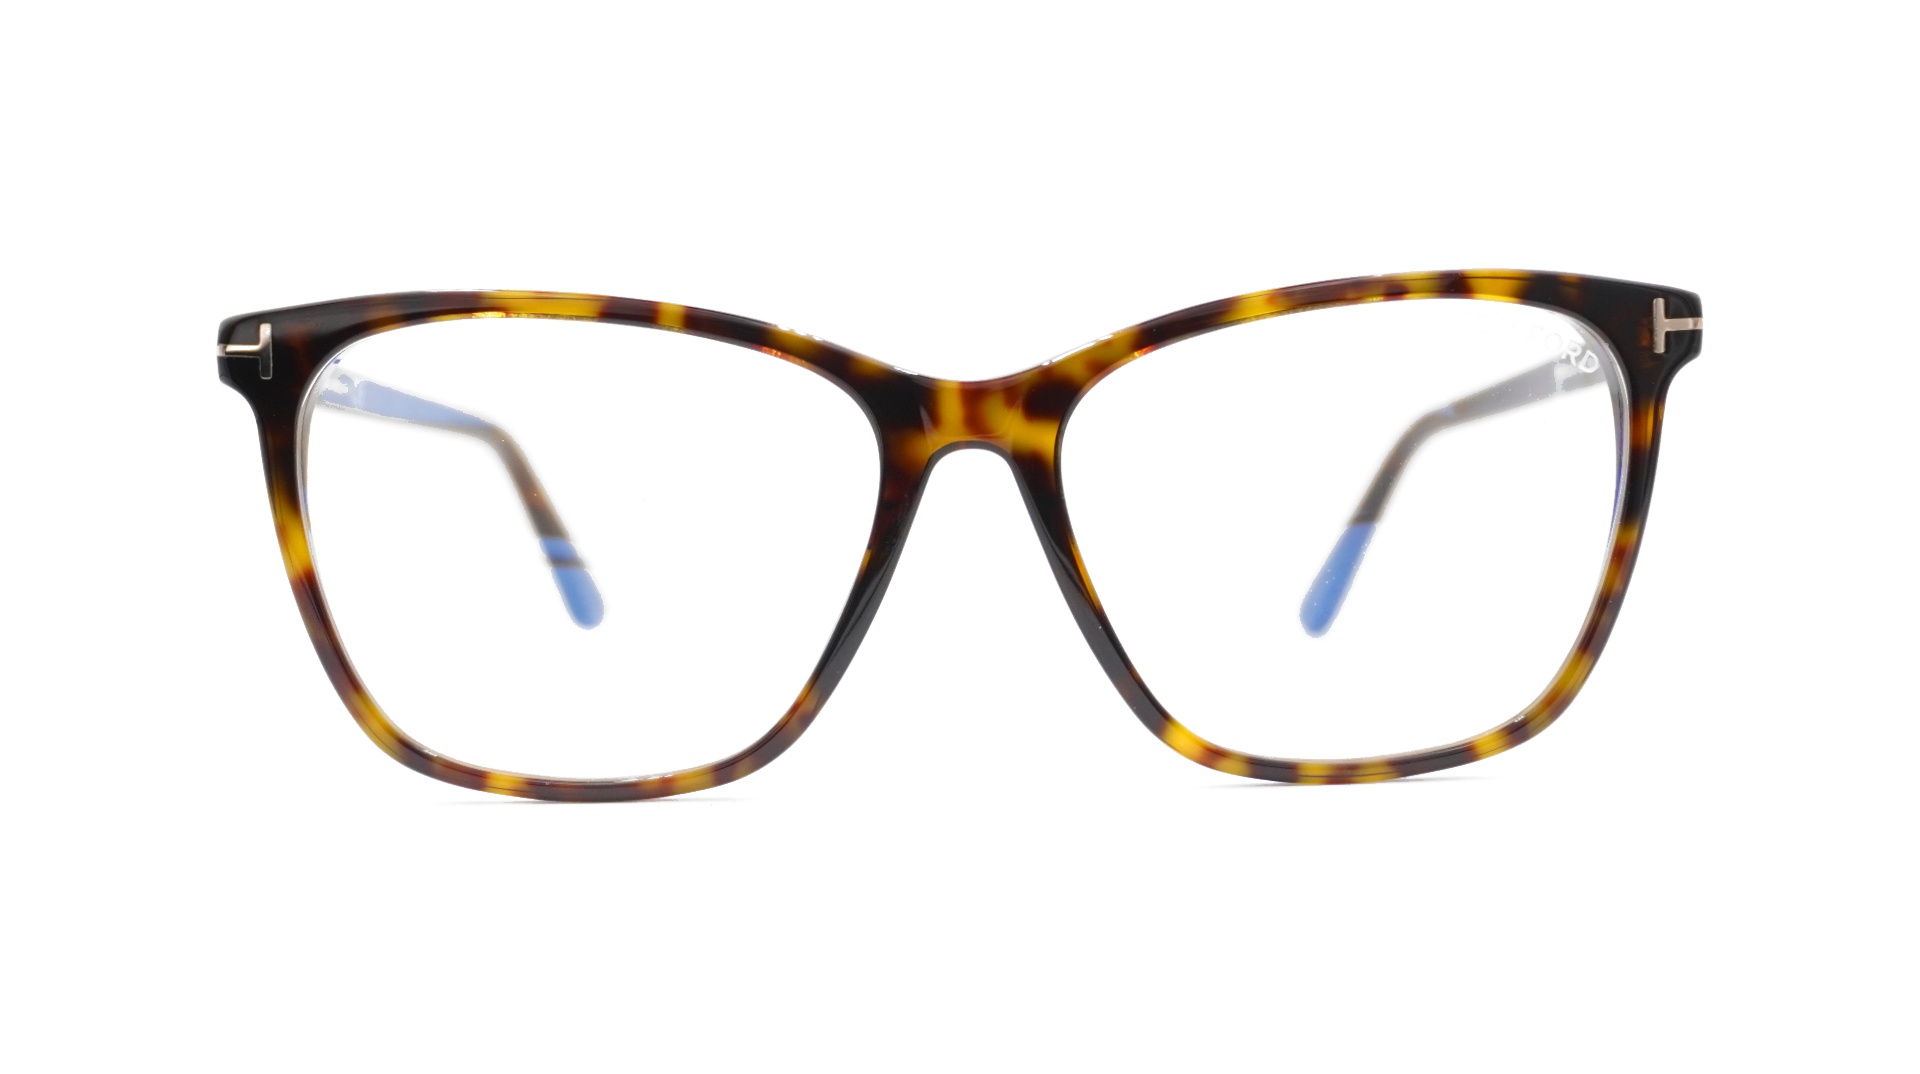 Glasses Tom-ford Tf5762-b, brown colour - Doyle